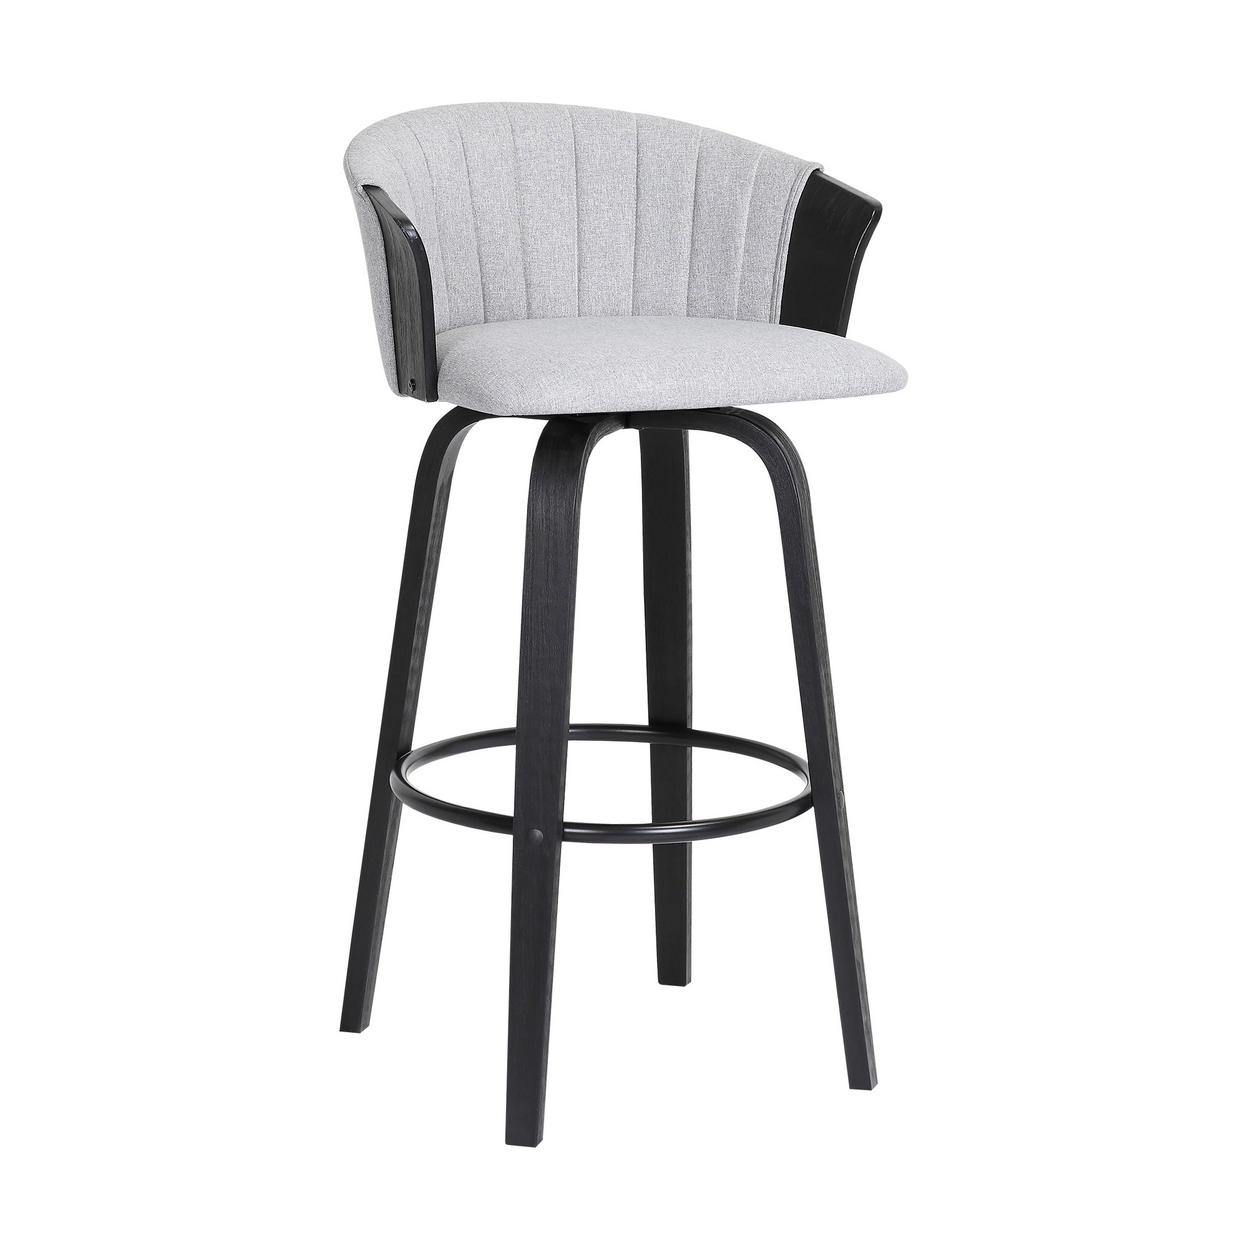 Oja 30 Inch Swivel Barstool Chair, Light Gray Fabric, Curved, Black Wood - Saltoro Sherpi